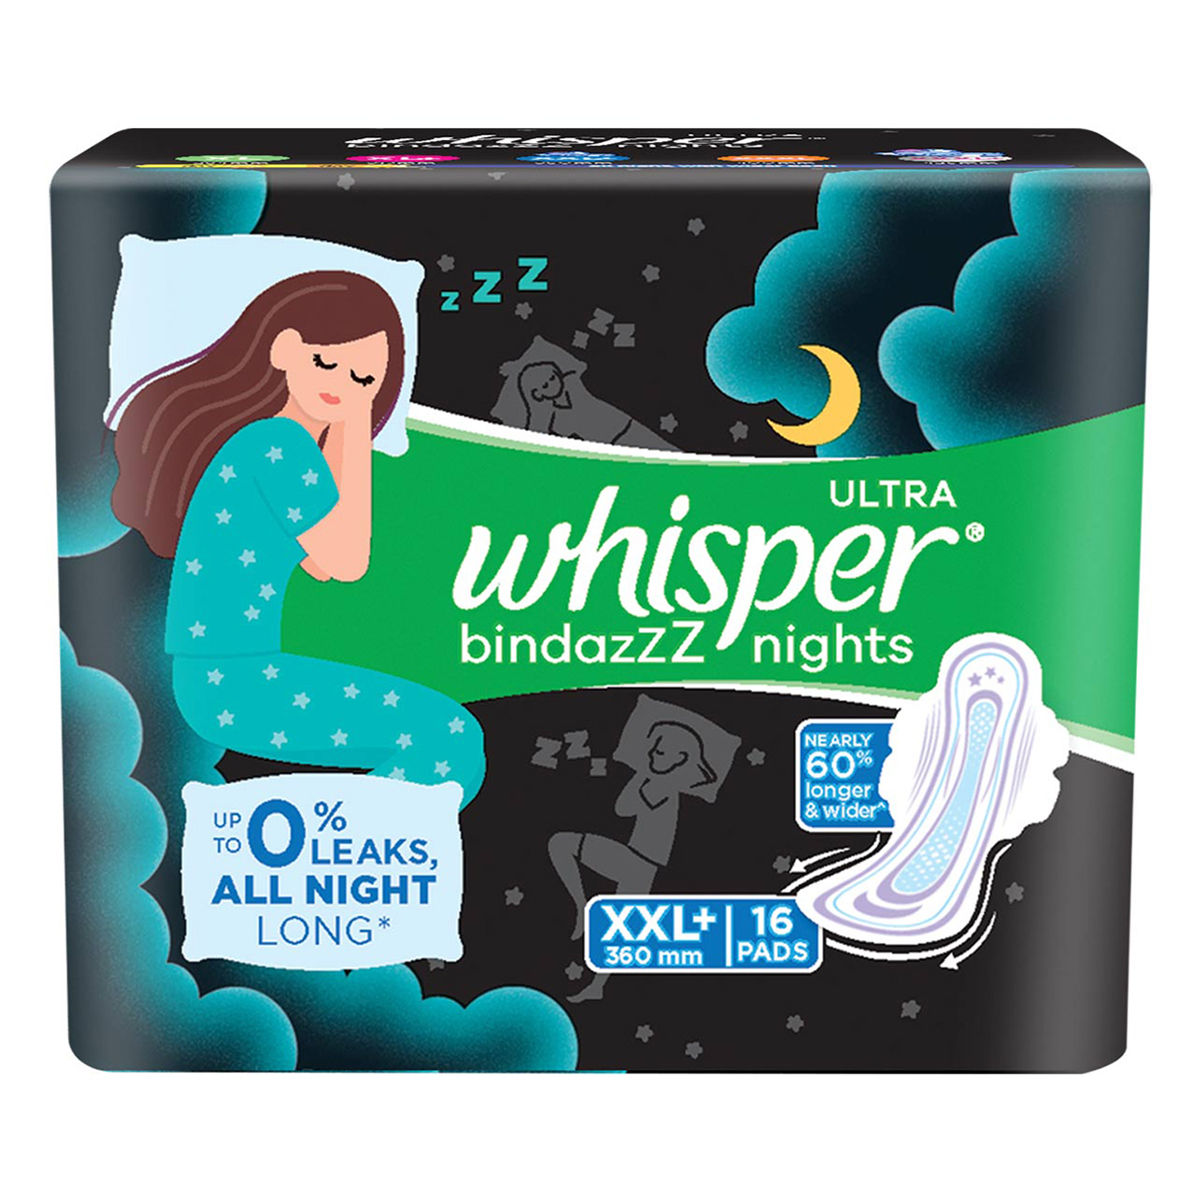 Buy Whisper Bindazzz Nights Sanitary Pads XXL+, 16 Count Online